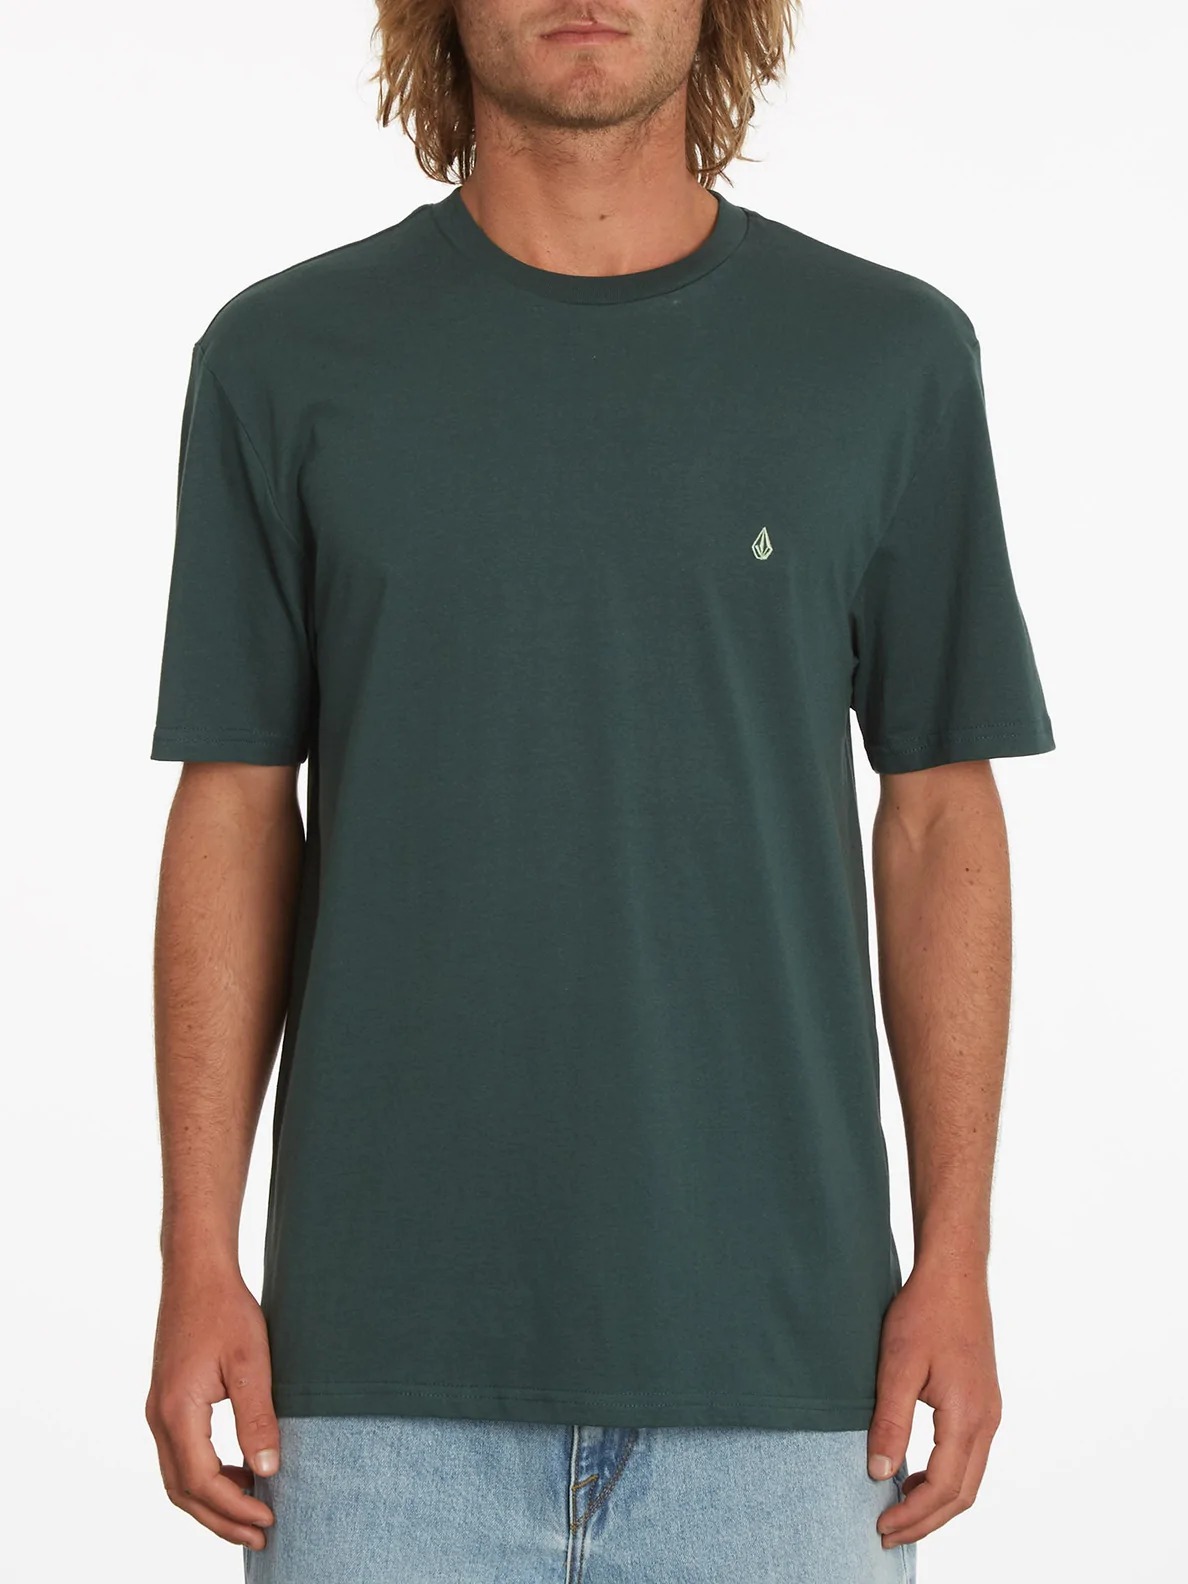 Volcom Stone Blanks T-Shirt cedar green